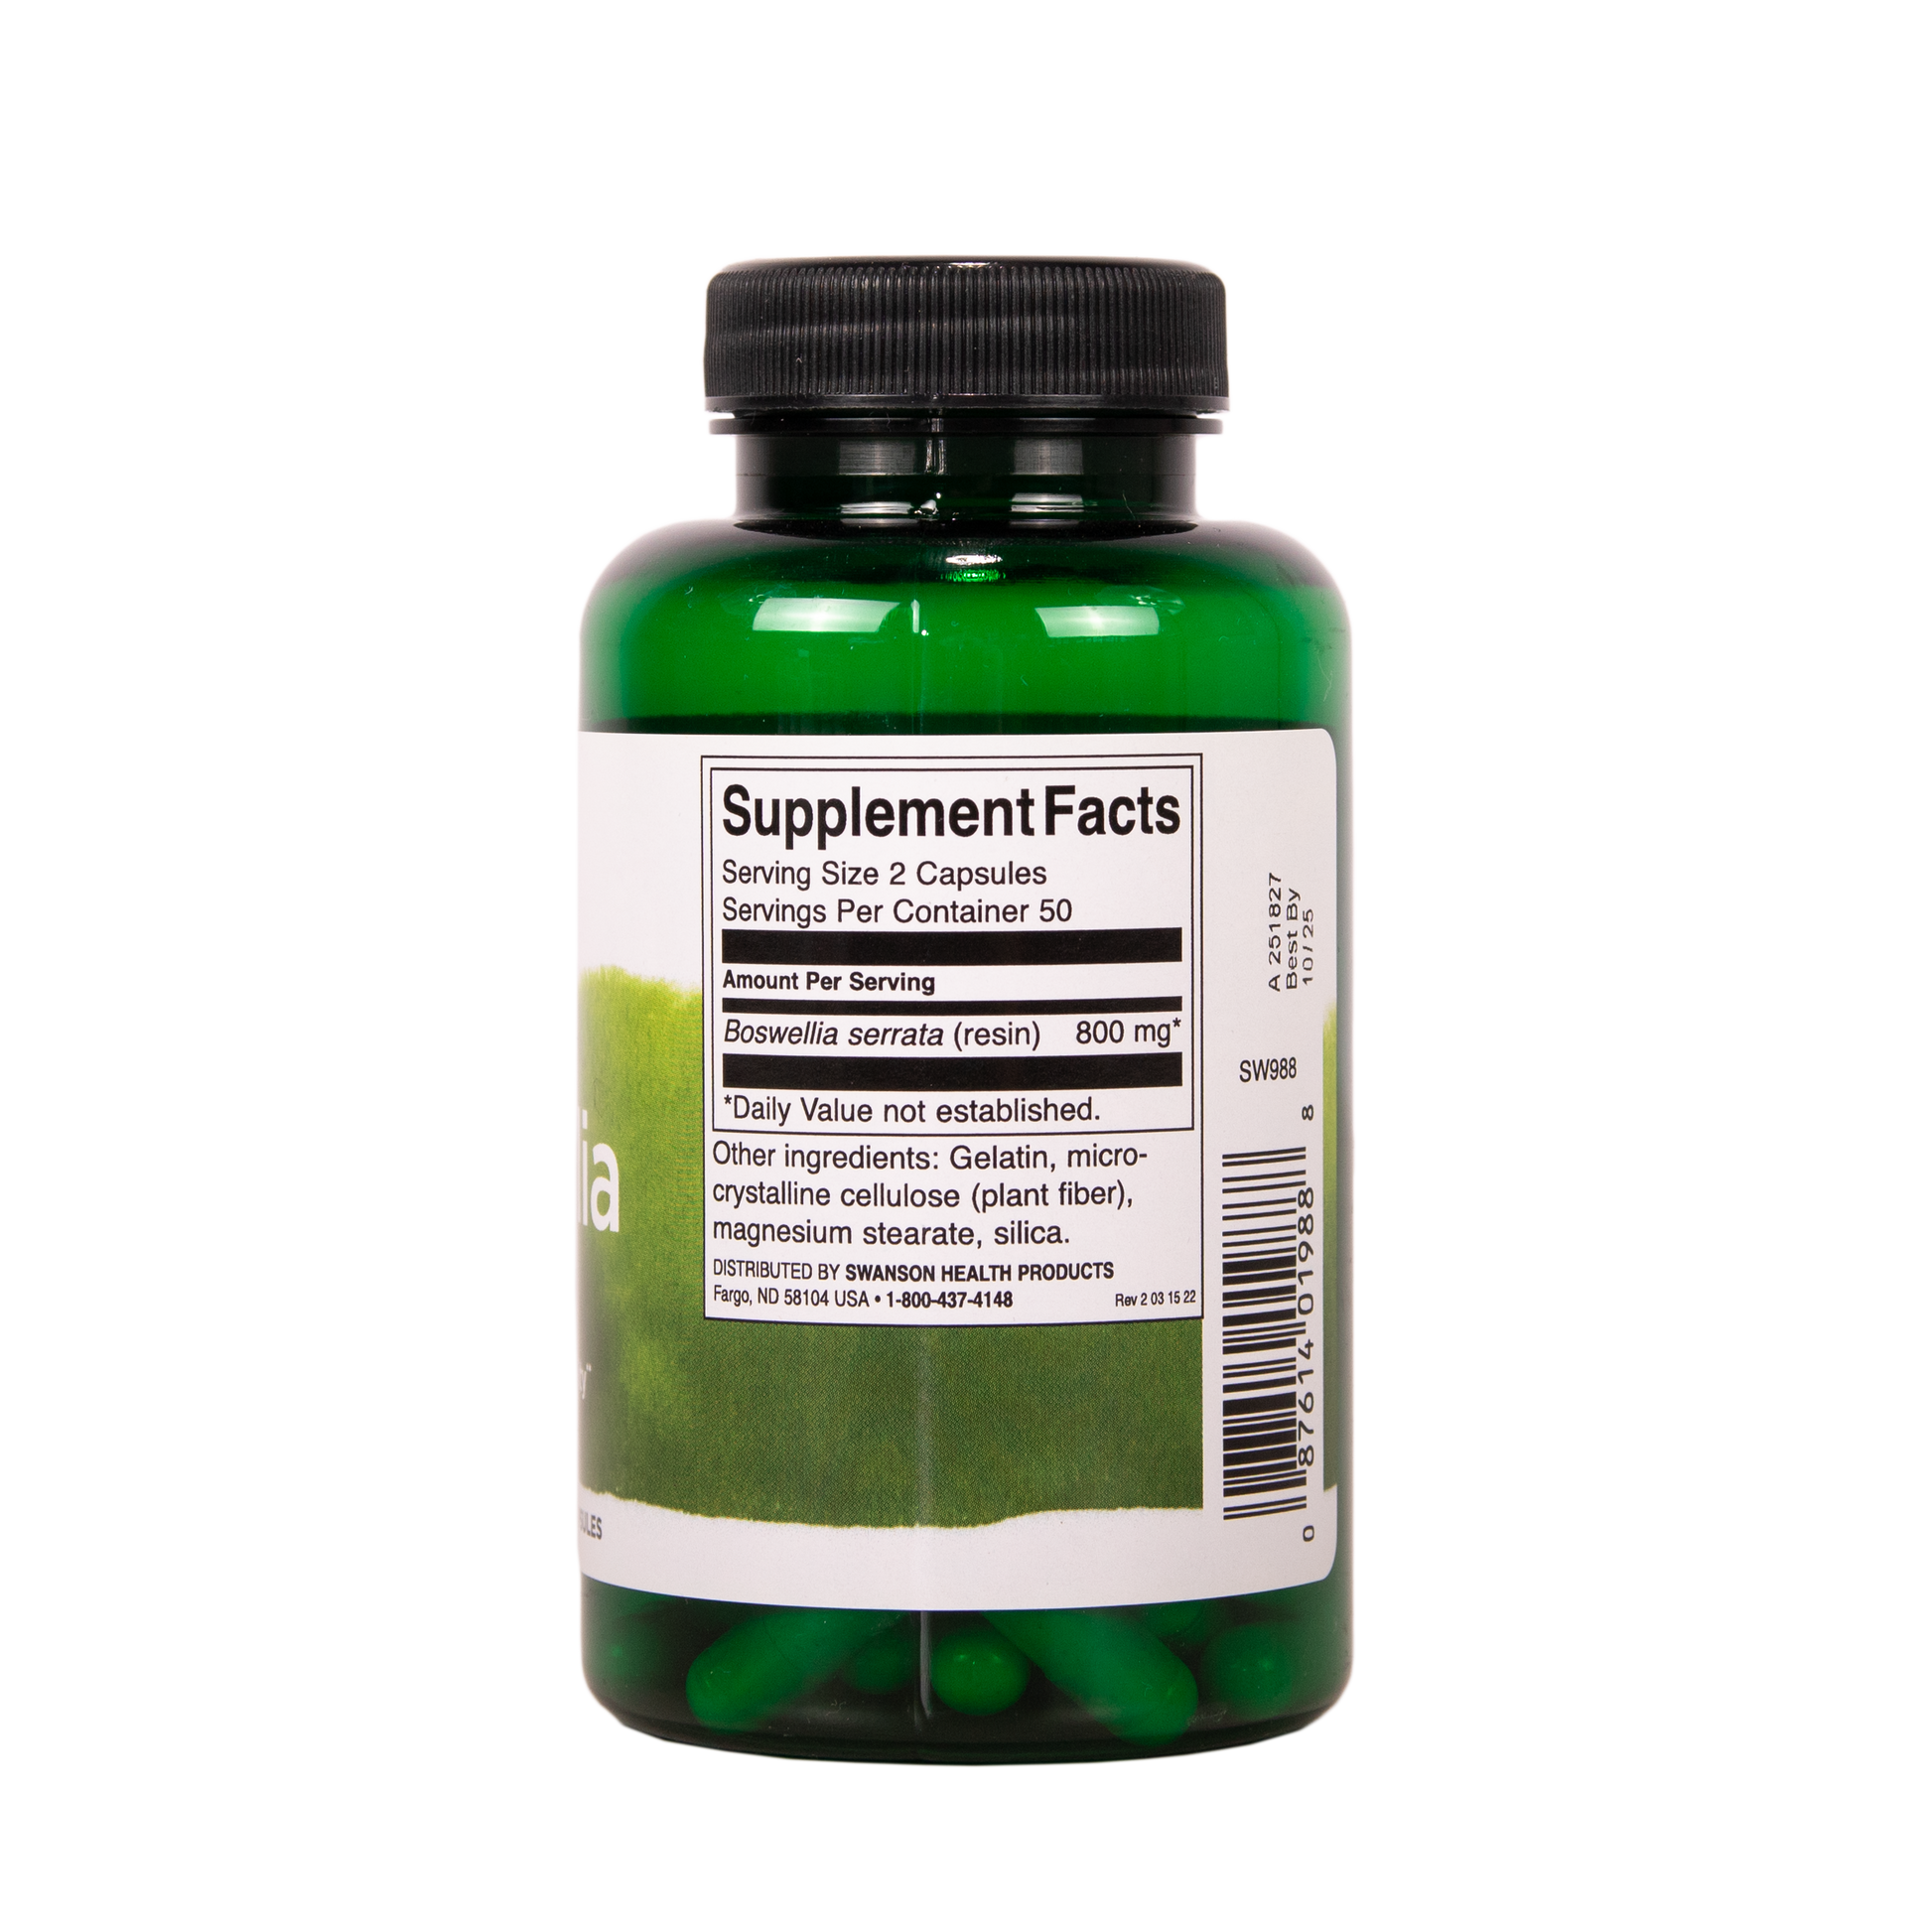 SWANSON Boswellia 400 mg 100 kapselia w2w terveys ja hyvinvointi verkkokauppa